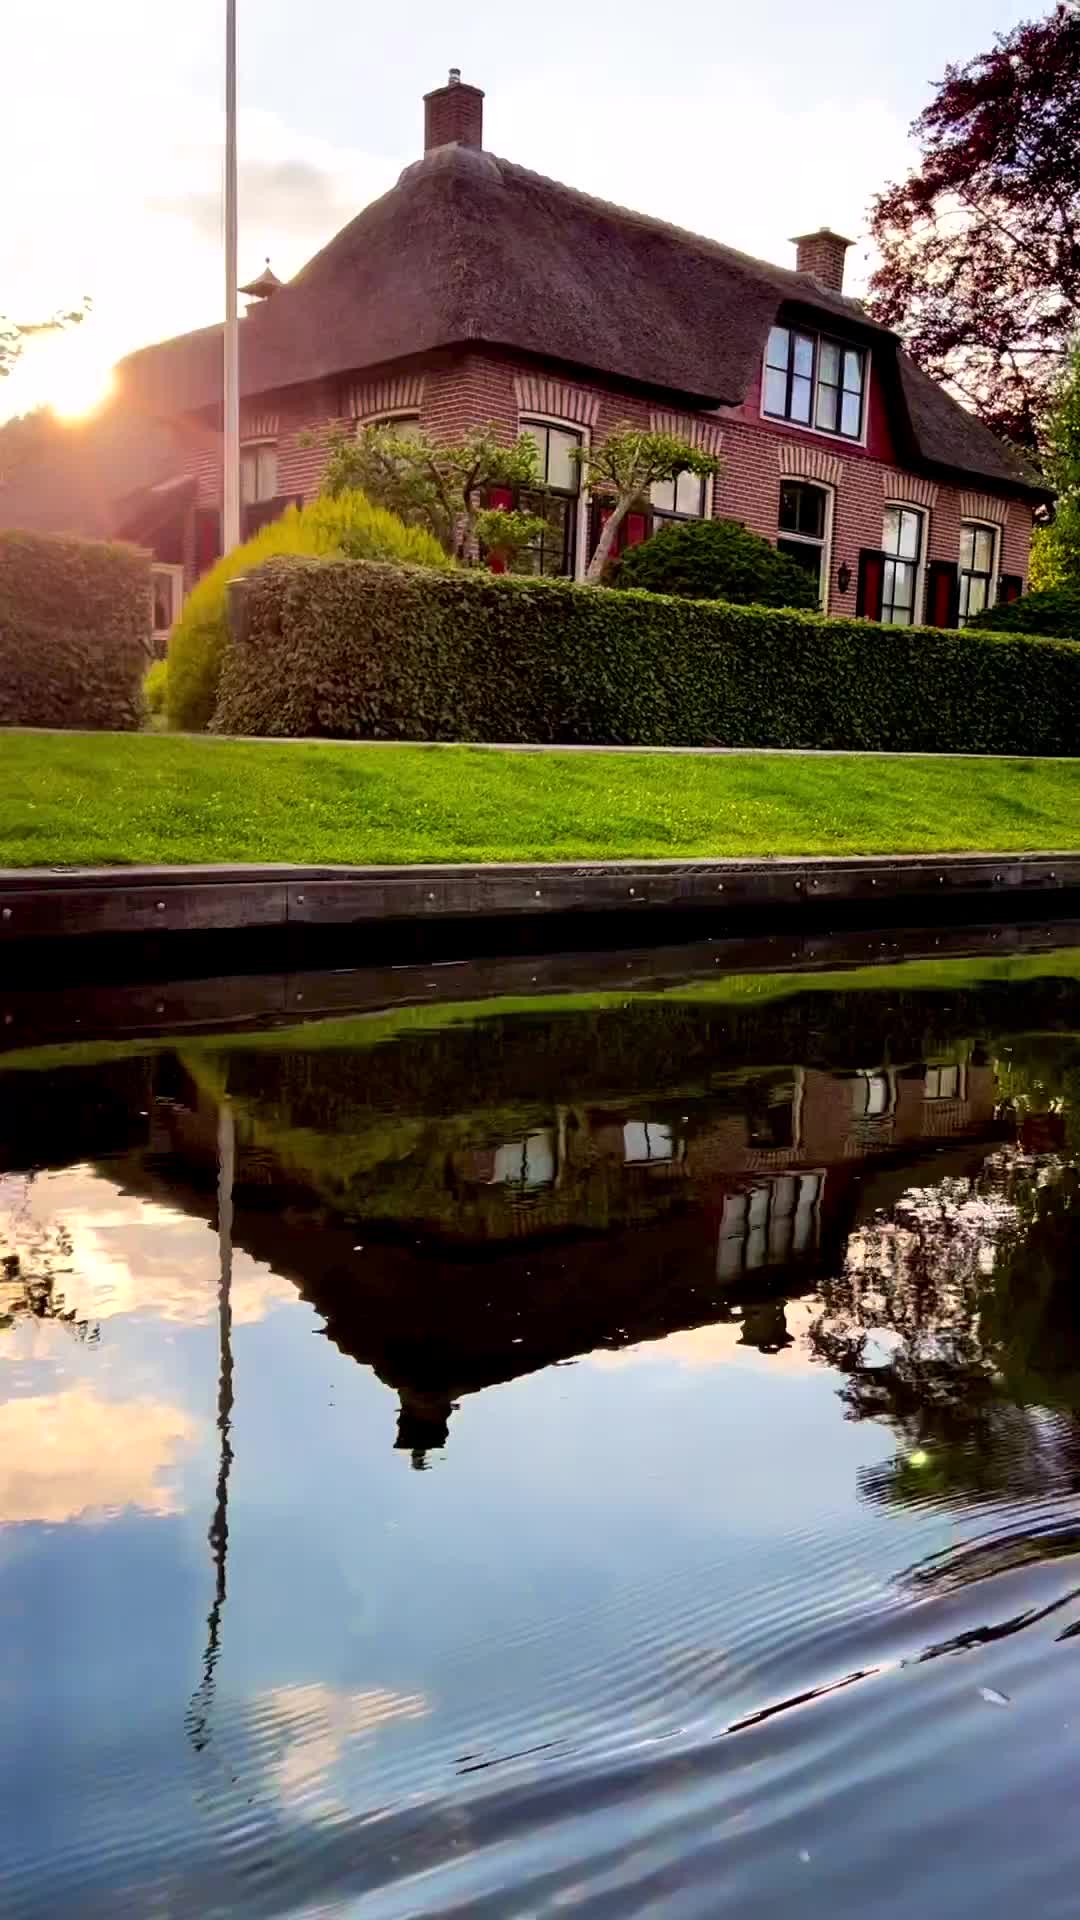 Life in Picturesque Giethoorn Village, Netherlands